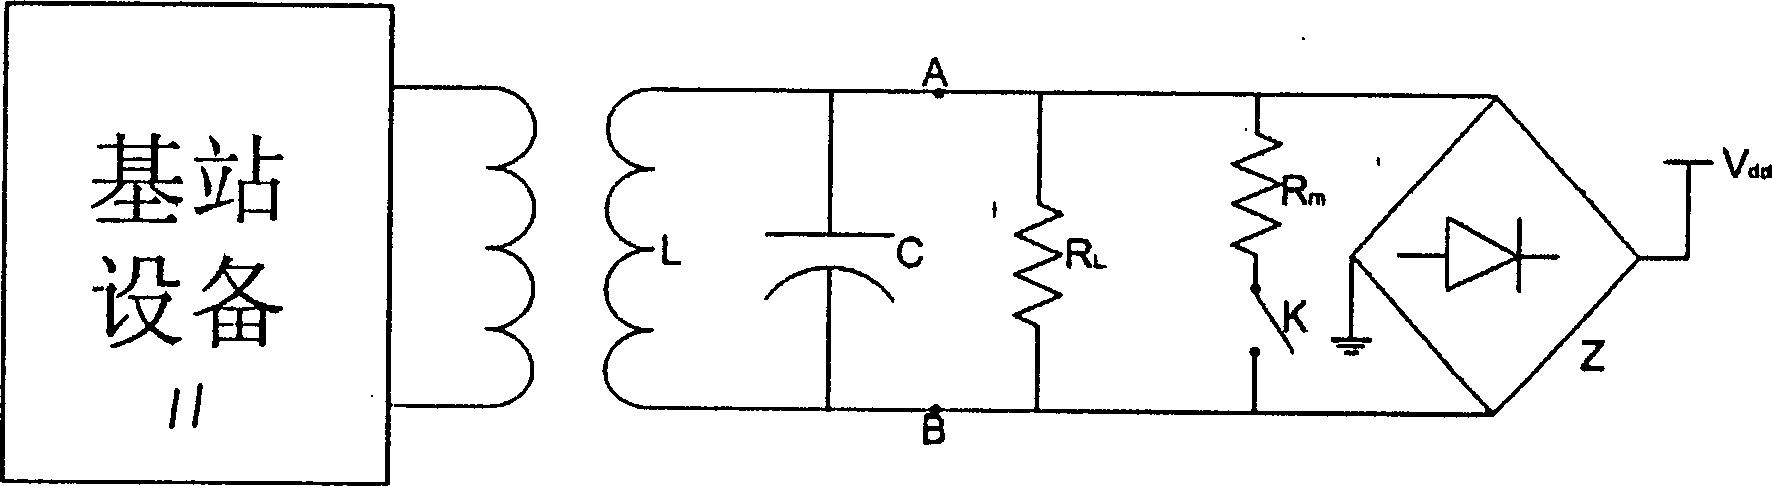 Feedback modulating circuit